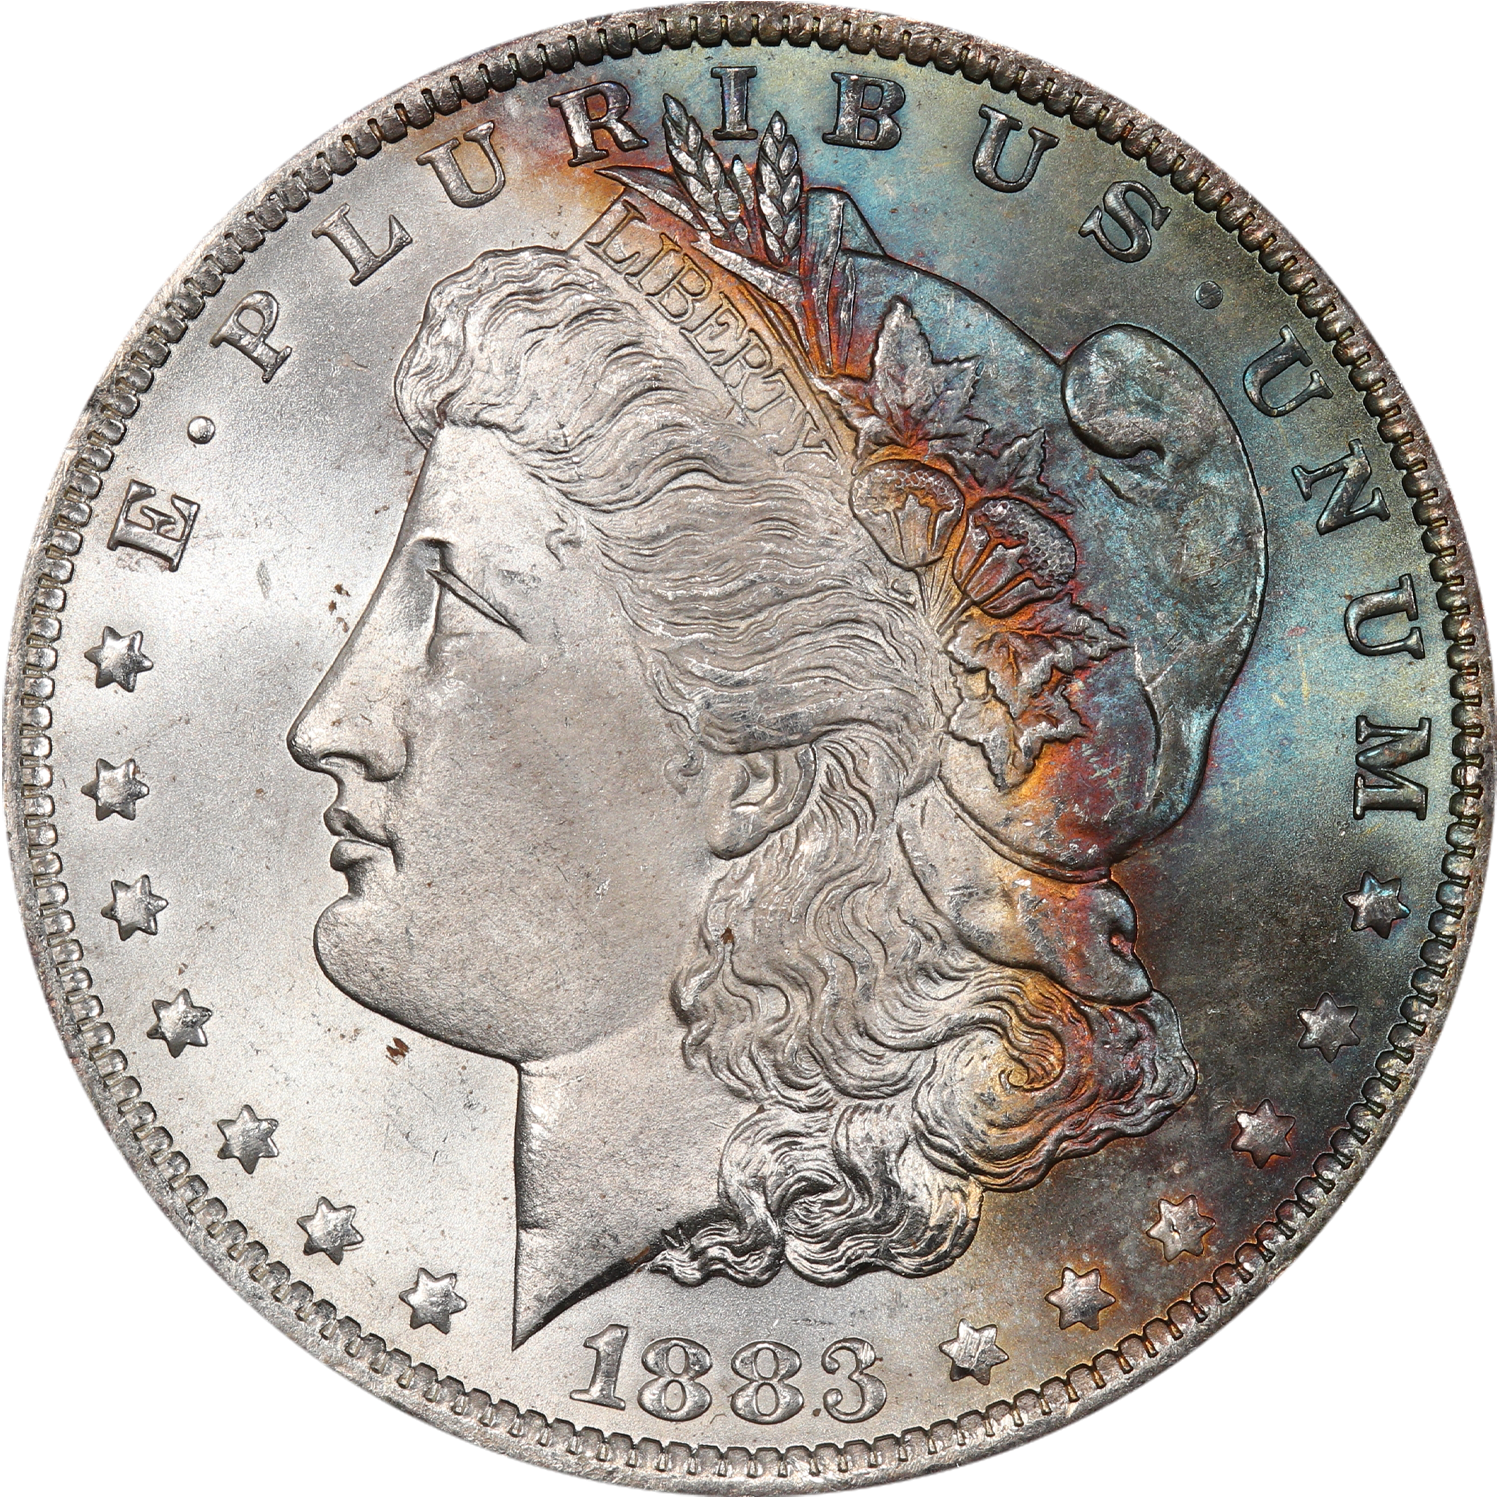 1883 new orleans mint morgan silver dollar